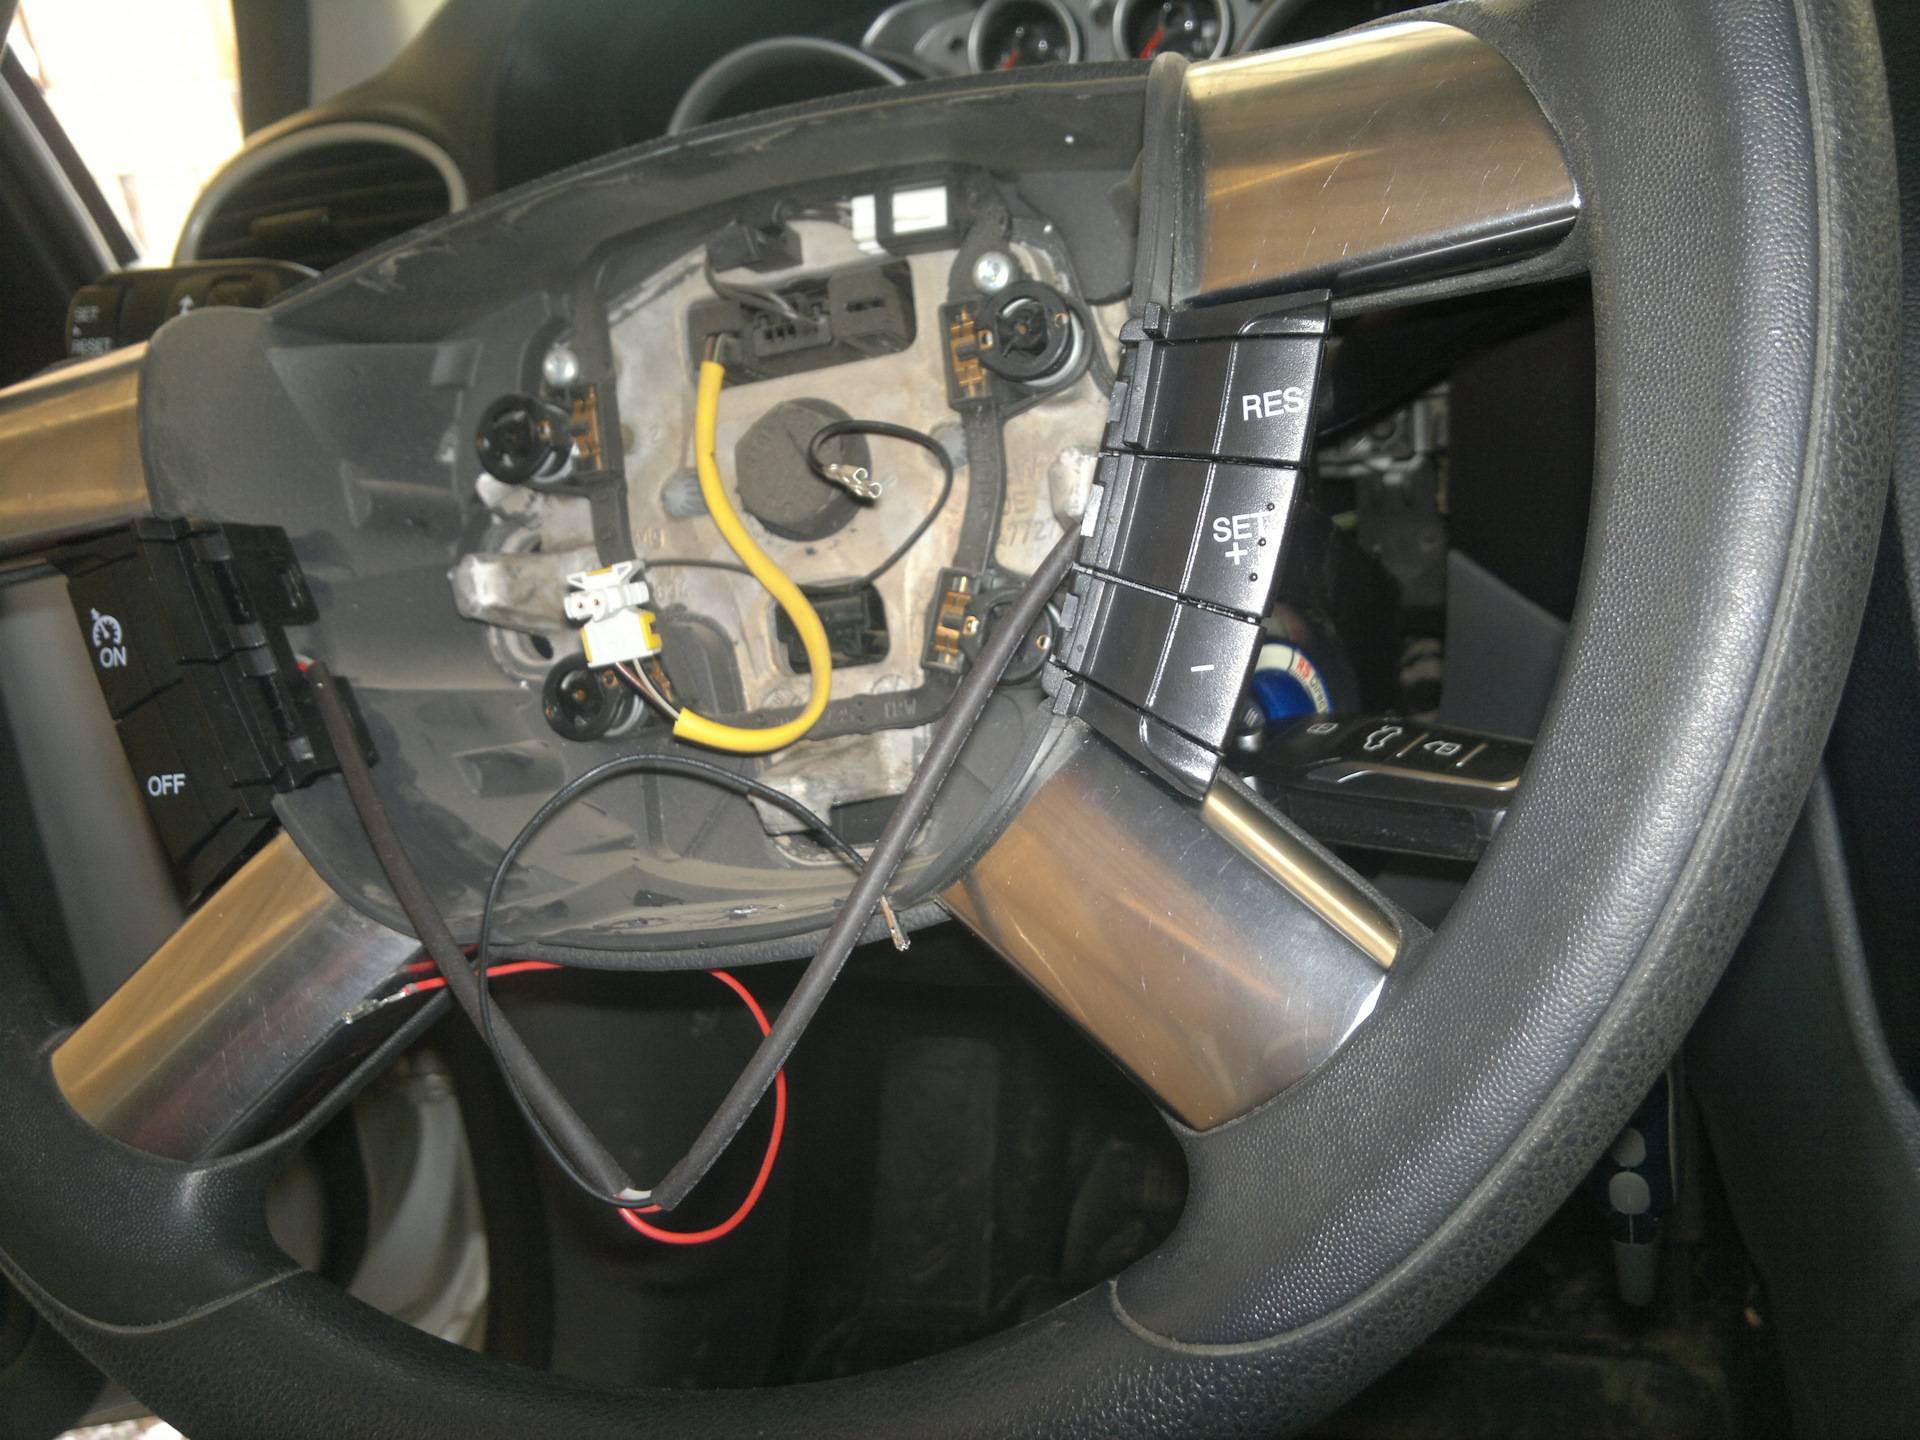 Установка круиз контроля на форд фокус 2: фото и видео